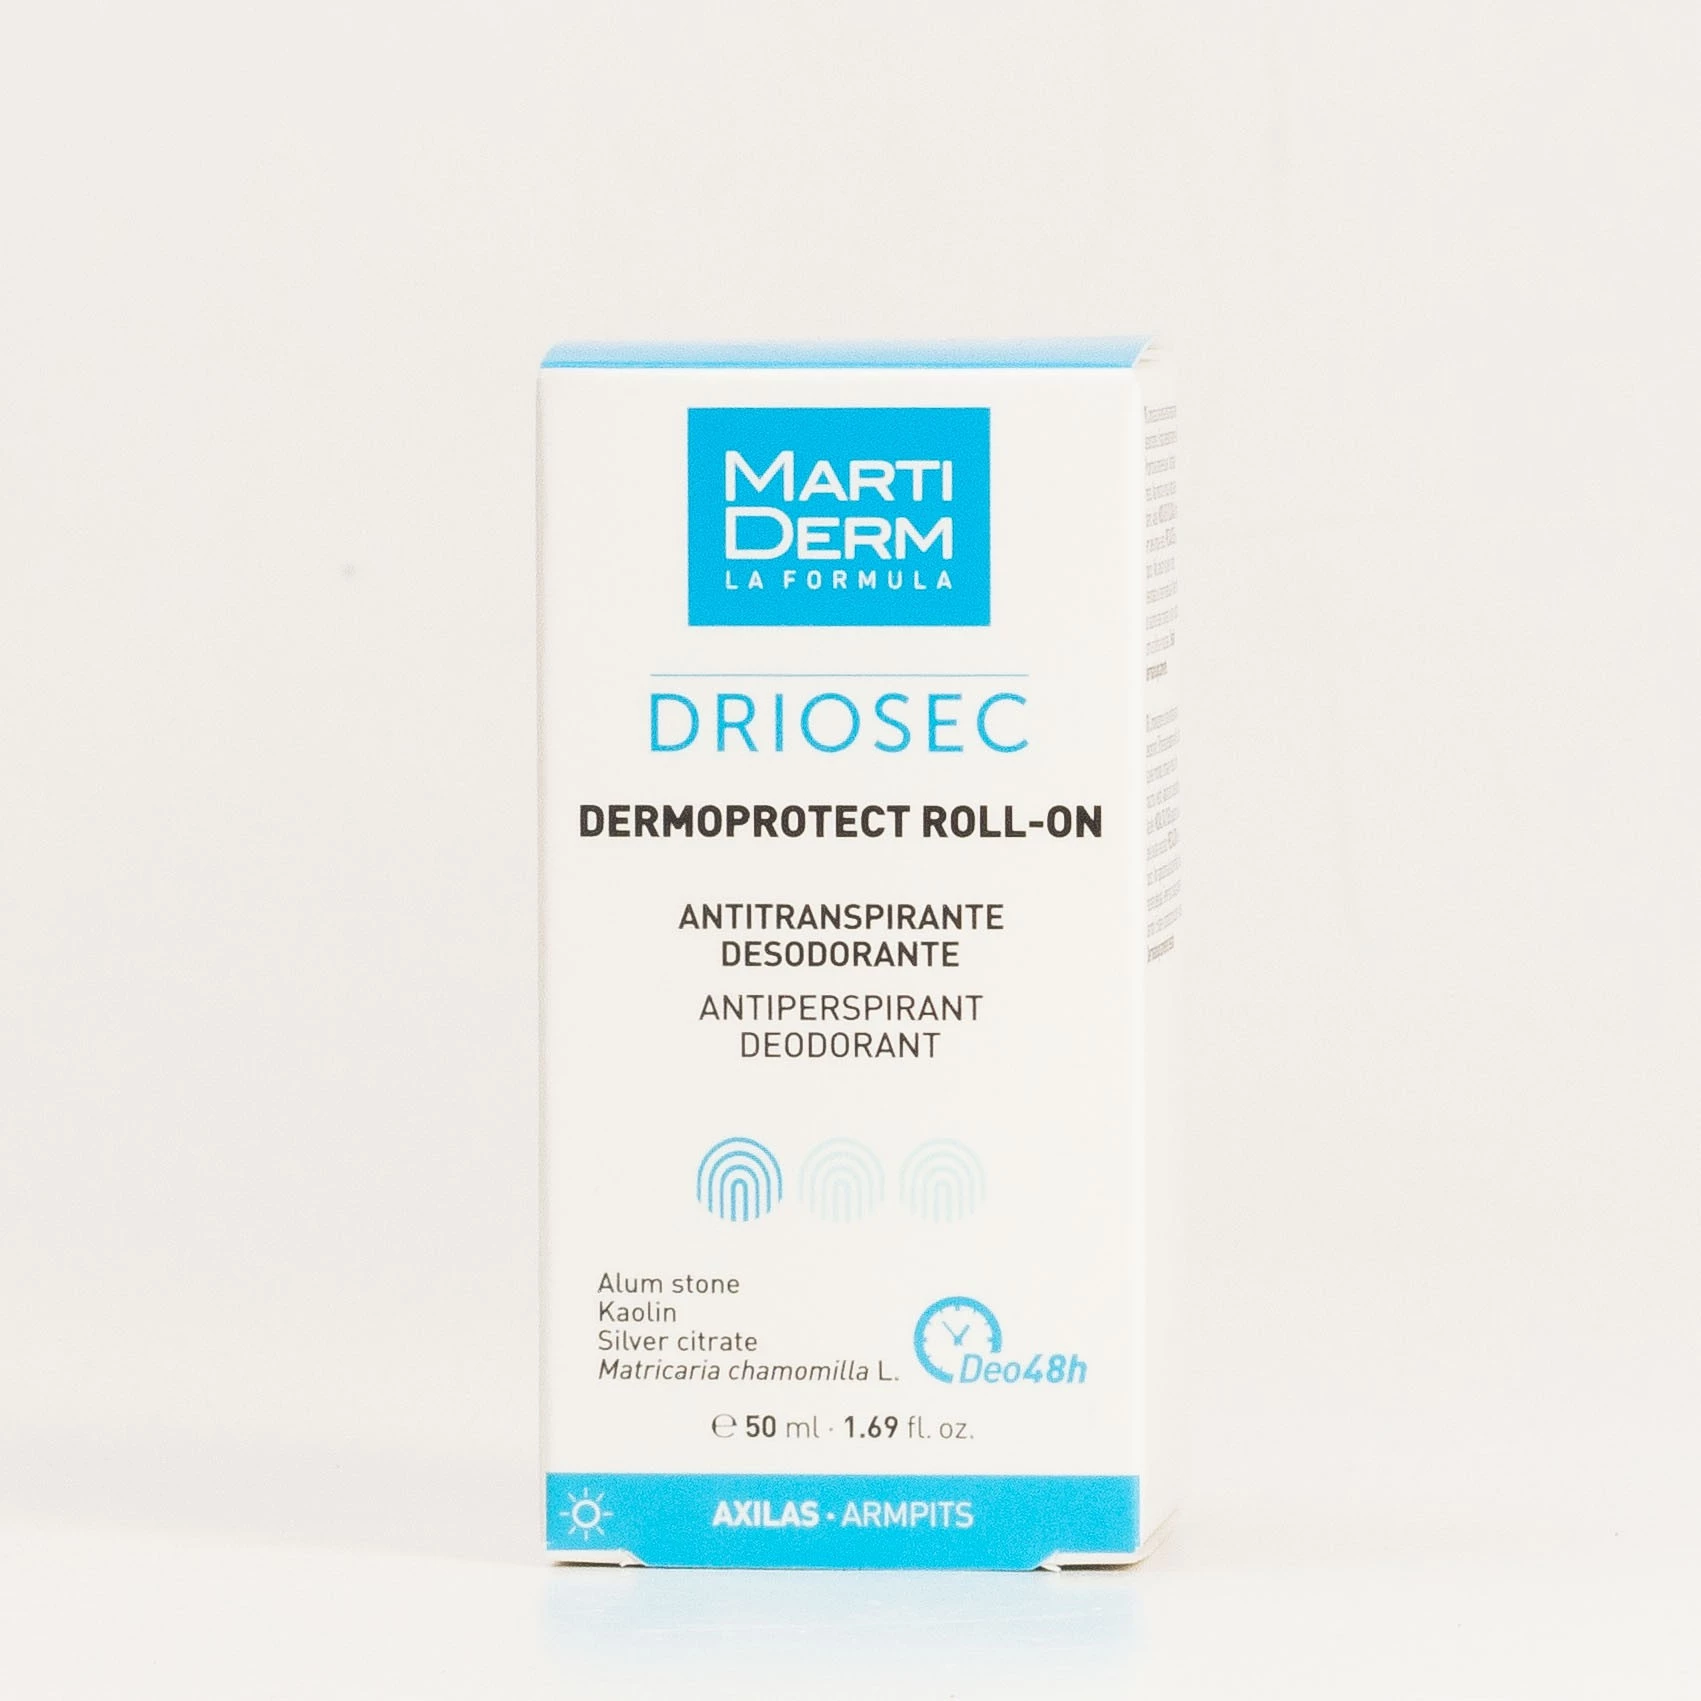 Martiderm Driosec Dermoprotect roll-on, 50ml.